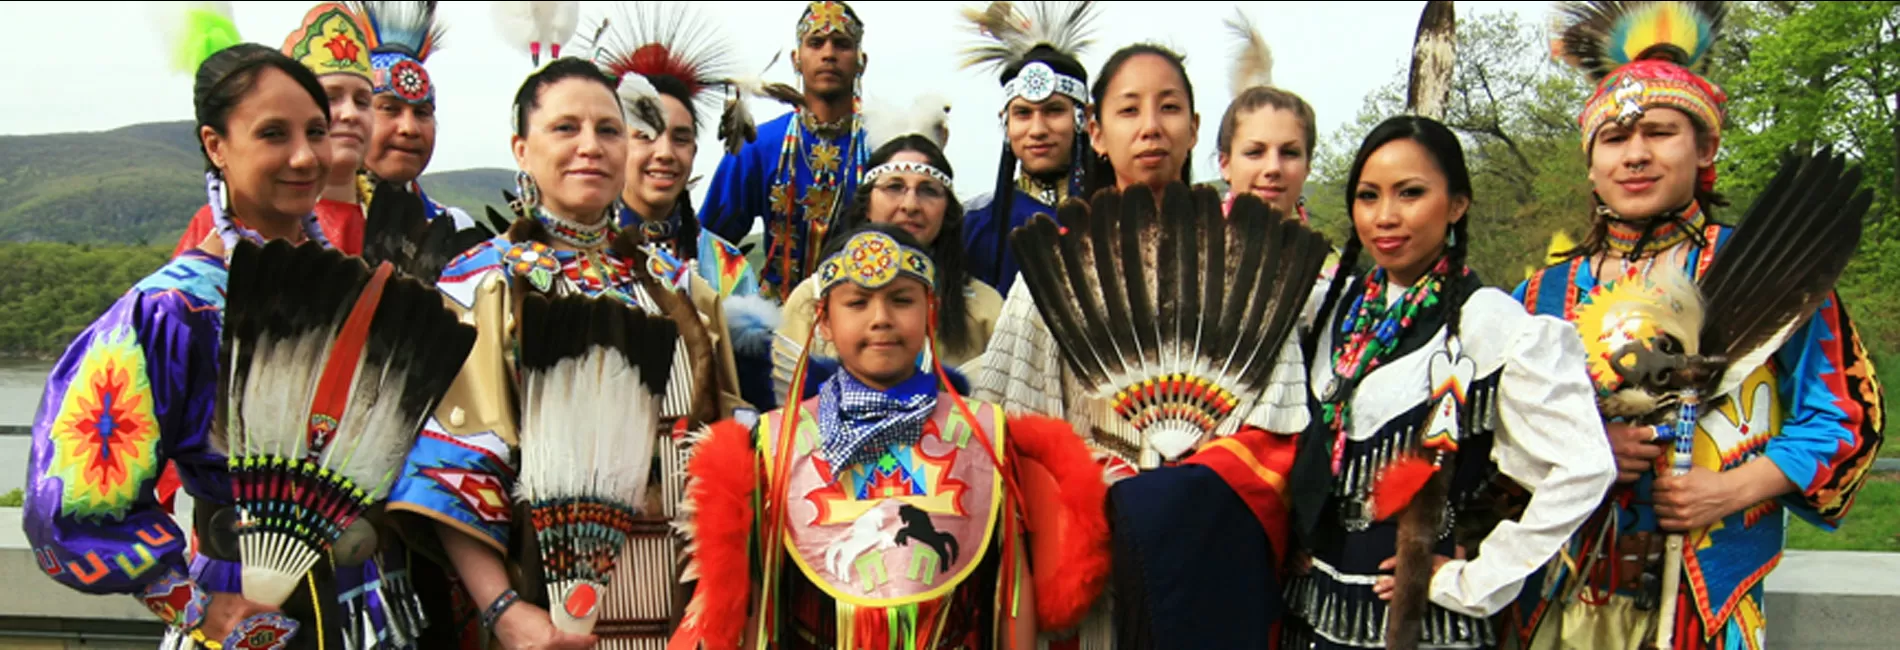 Redhawk Native American Dancers